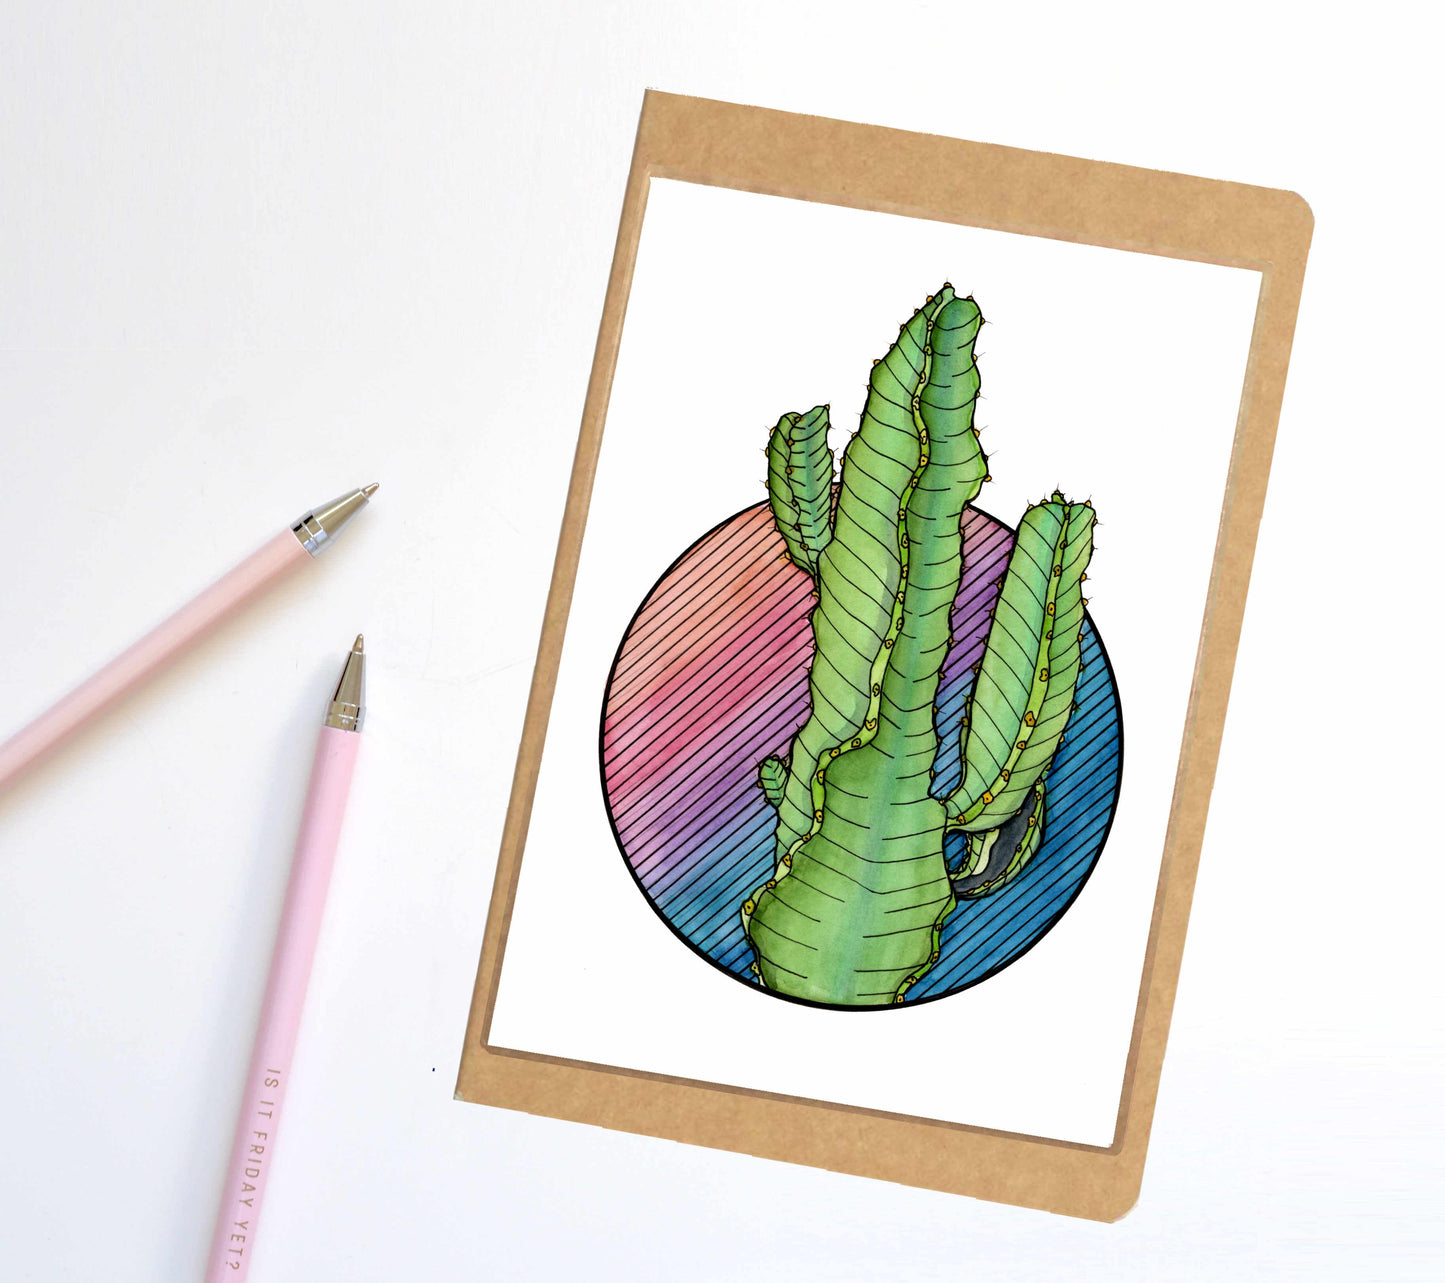 PinkPolish Design Notebook "Prickles the Cactus" Succulent Inspired Notebook / Sketchbook / Journal